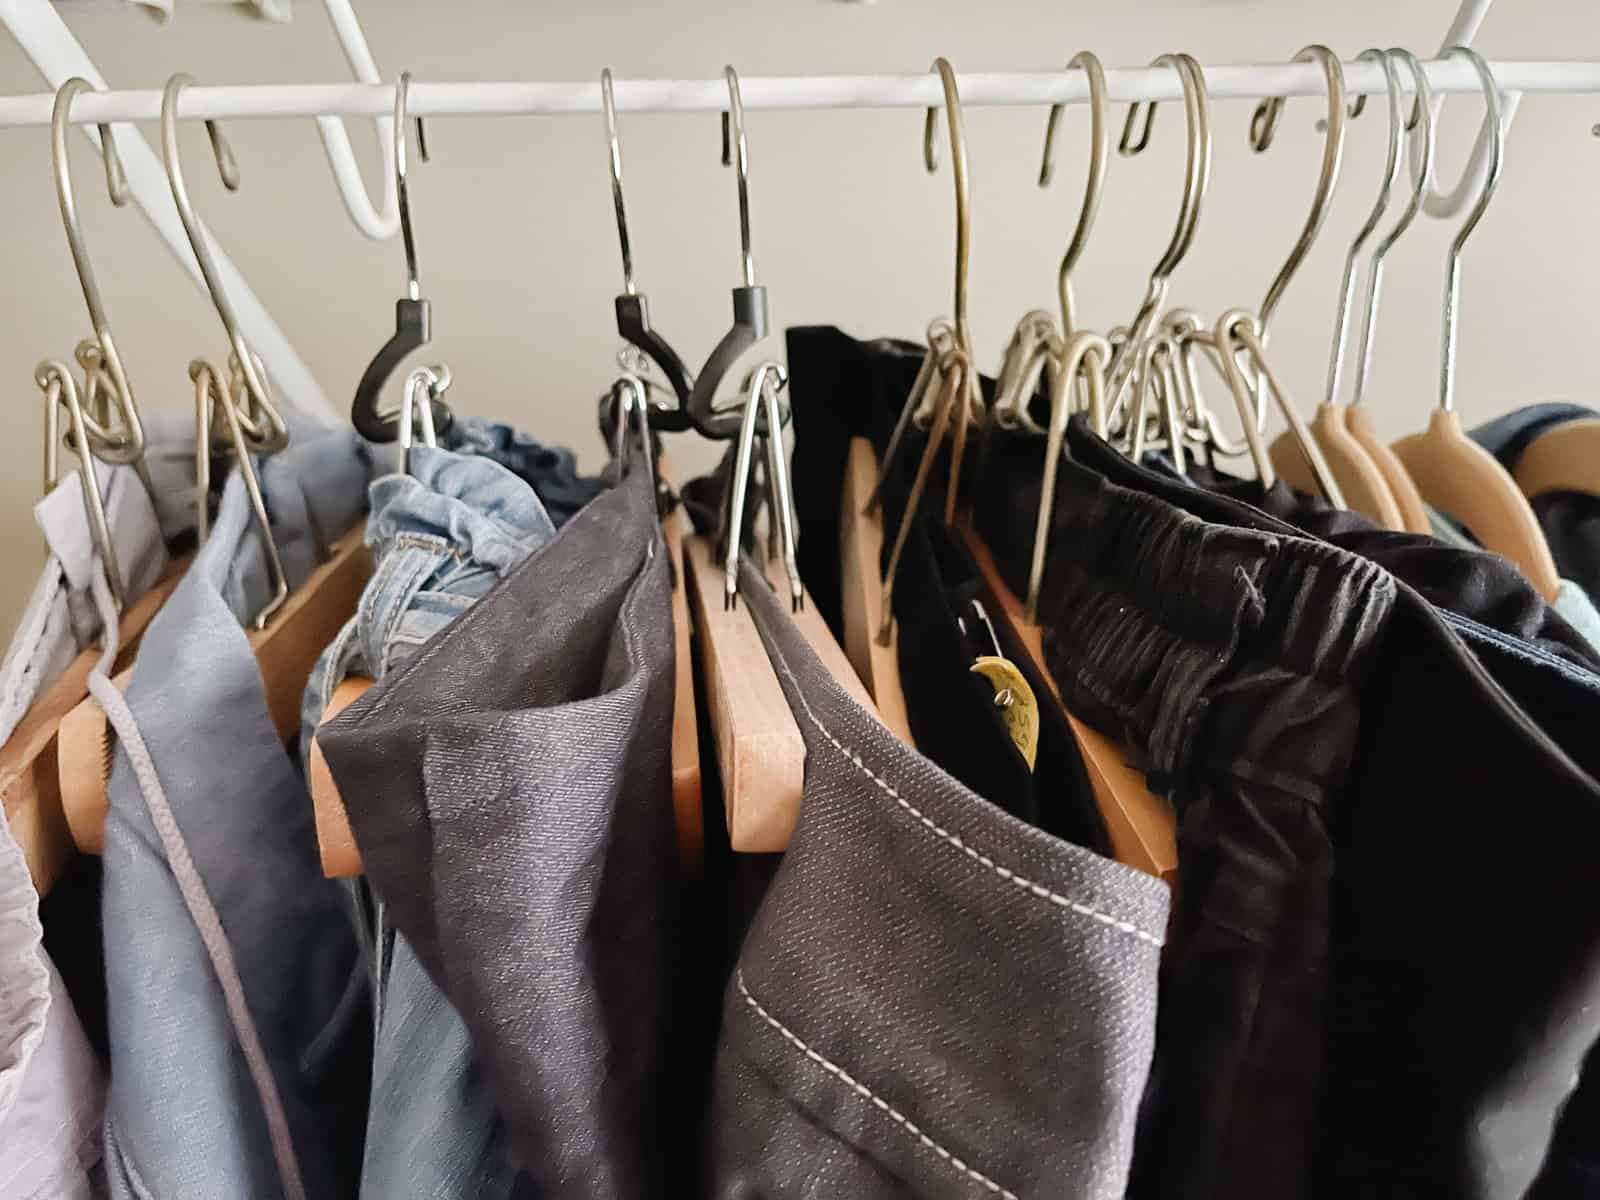 organized pants on wood hangers in closet